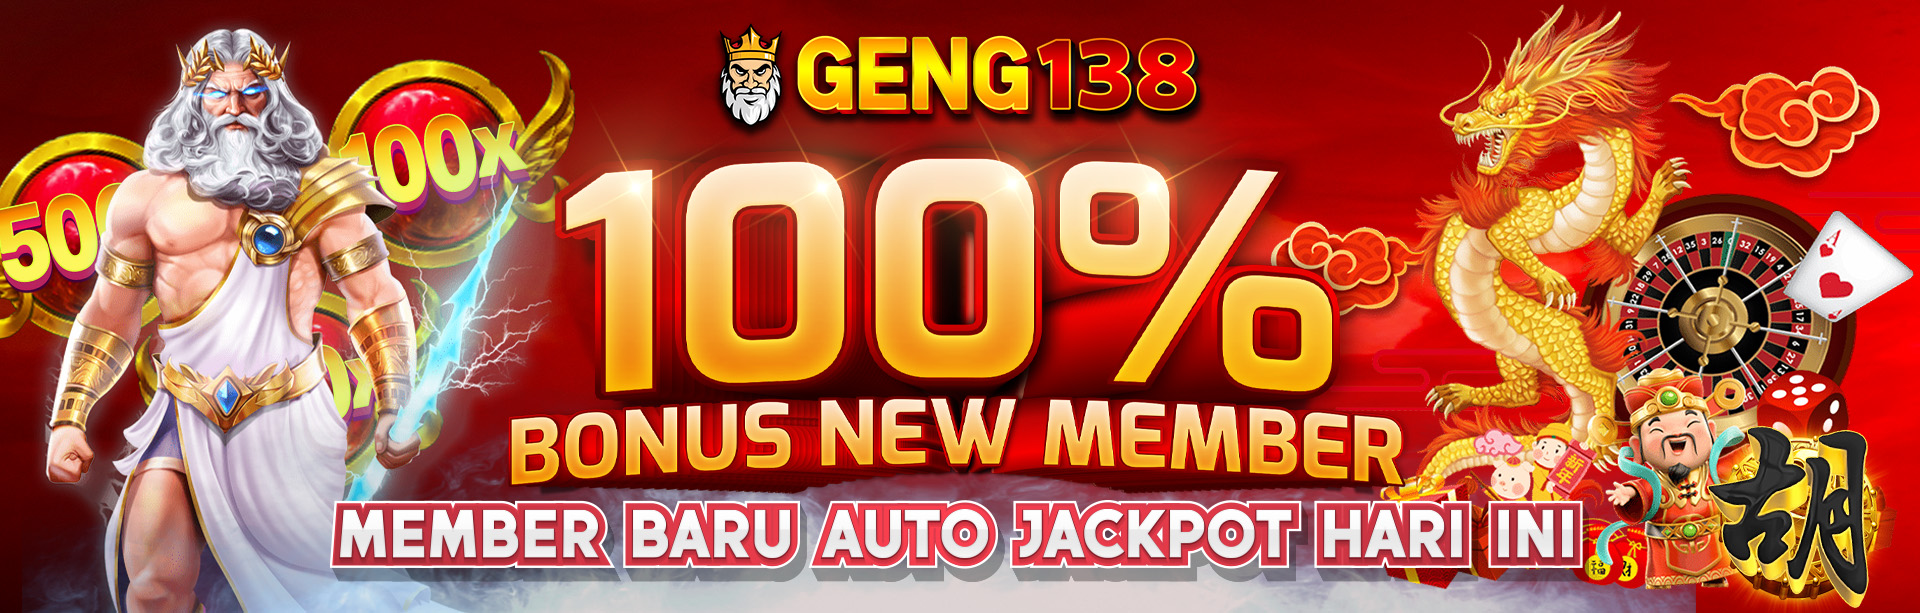 geng138 bonus new member 100